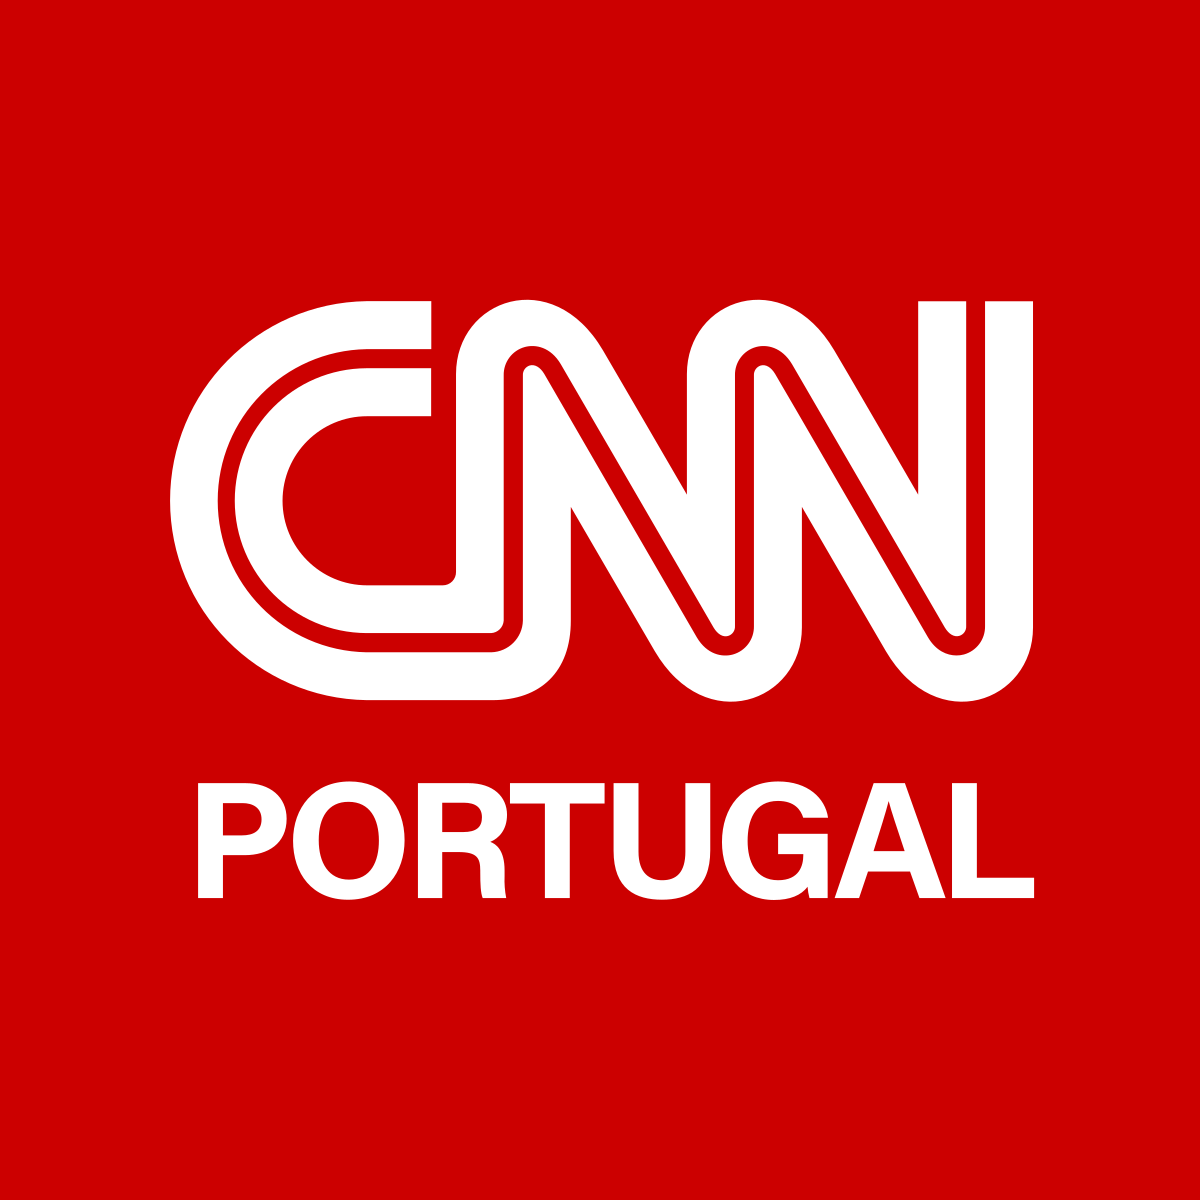 CNN Portugal logo